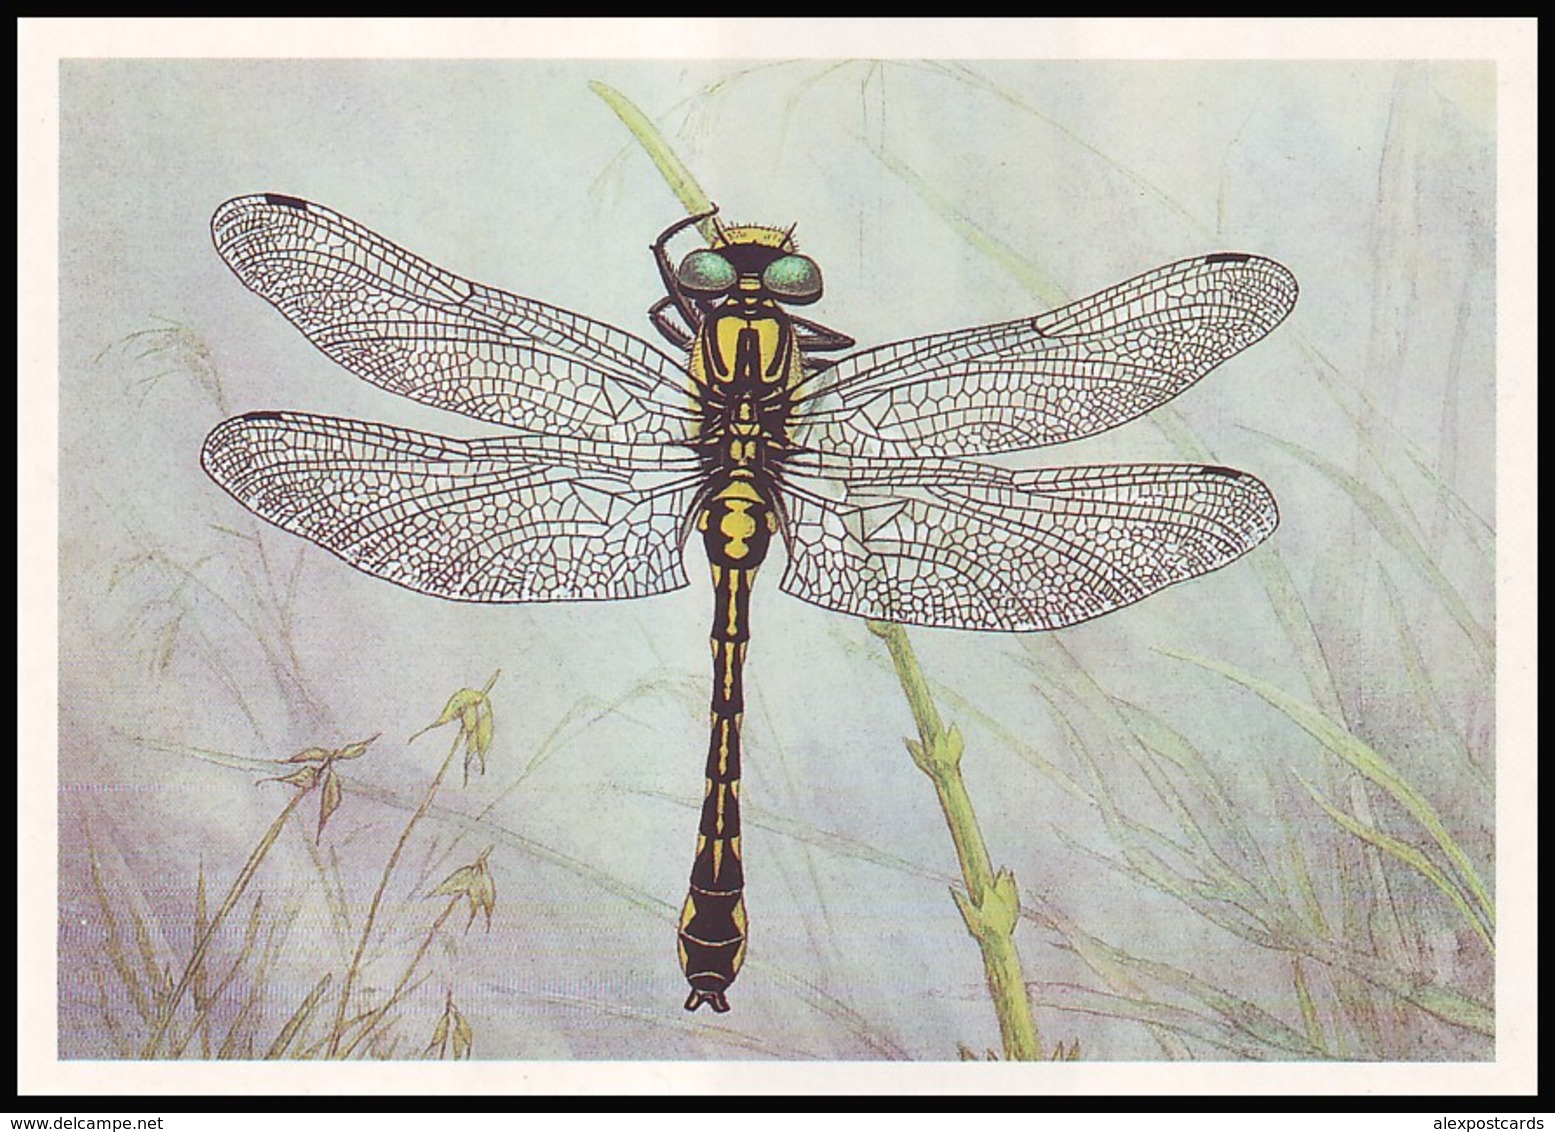 DRAGONFLY - Comphus Vulgatissimus L. Artist L. Aristov. Unused Postcard (USSR, 1987) - Insekten